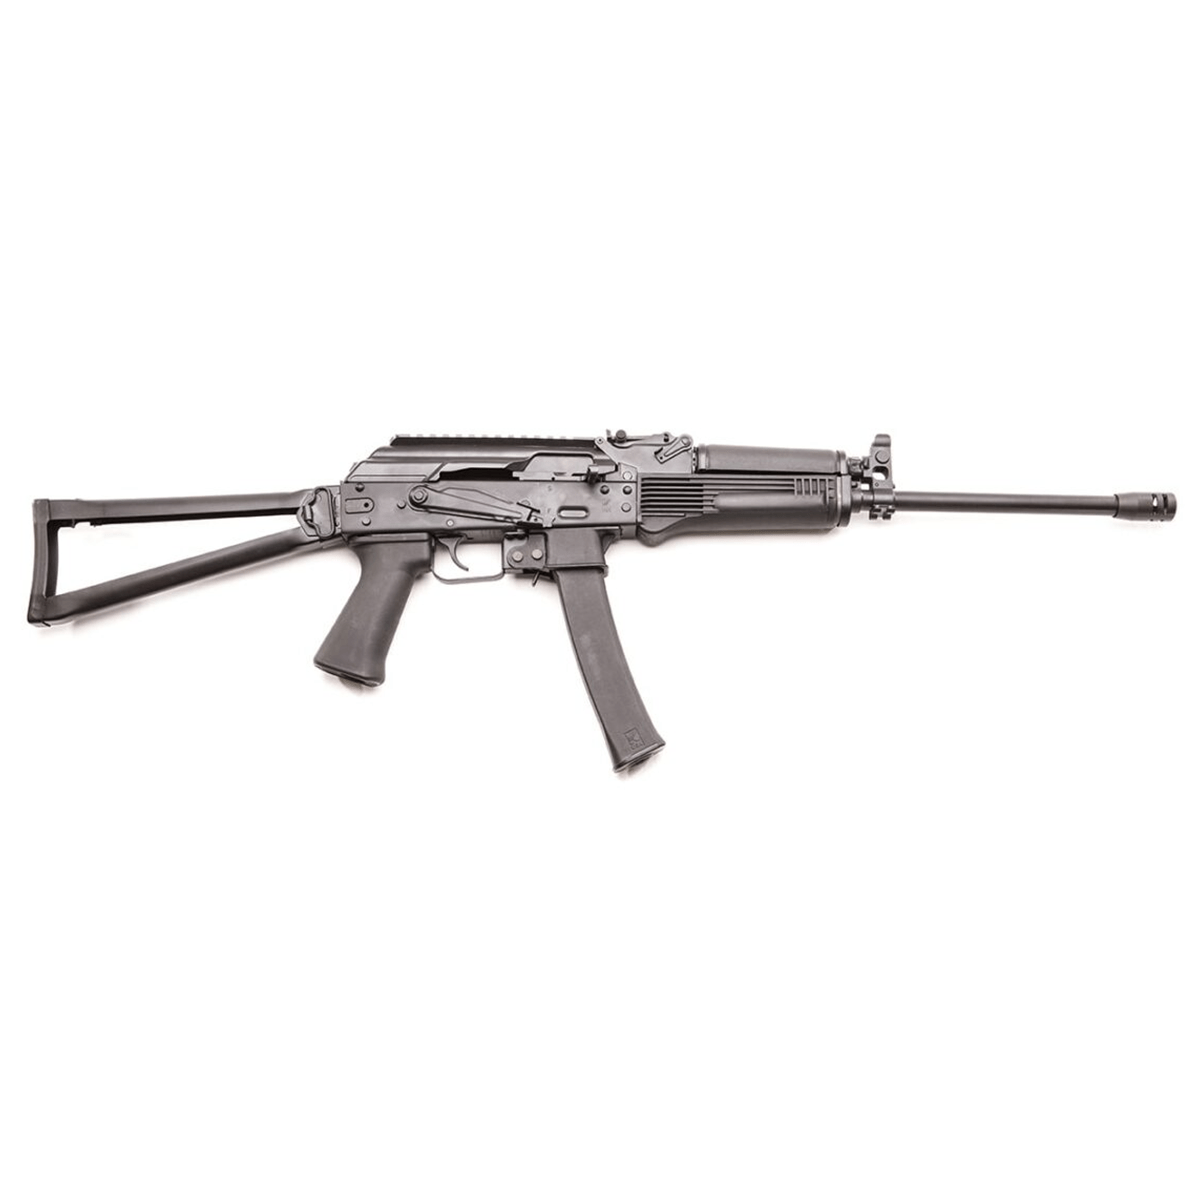 Kalashnikov USA KR-9 9mm AK Rifle with Folding Stock